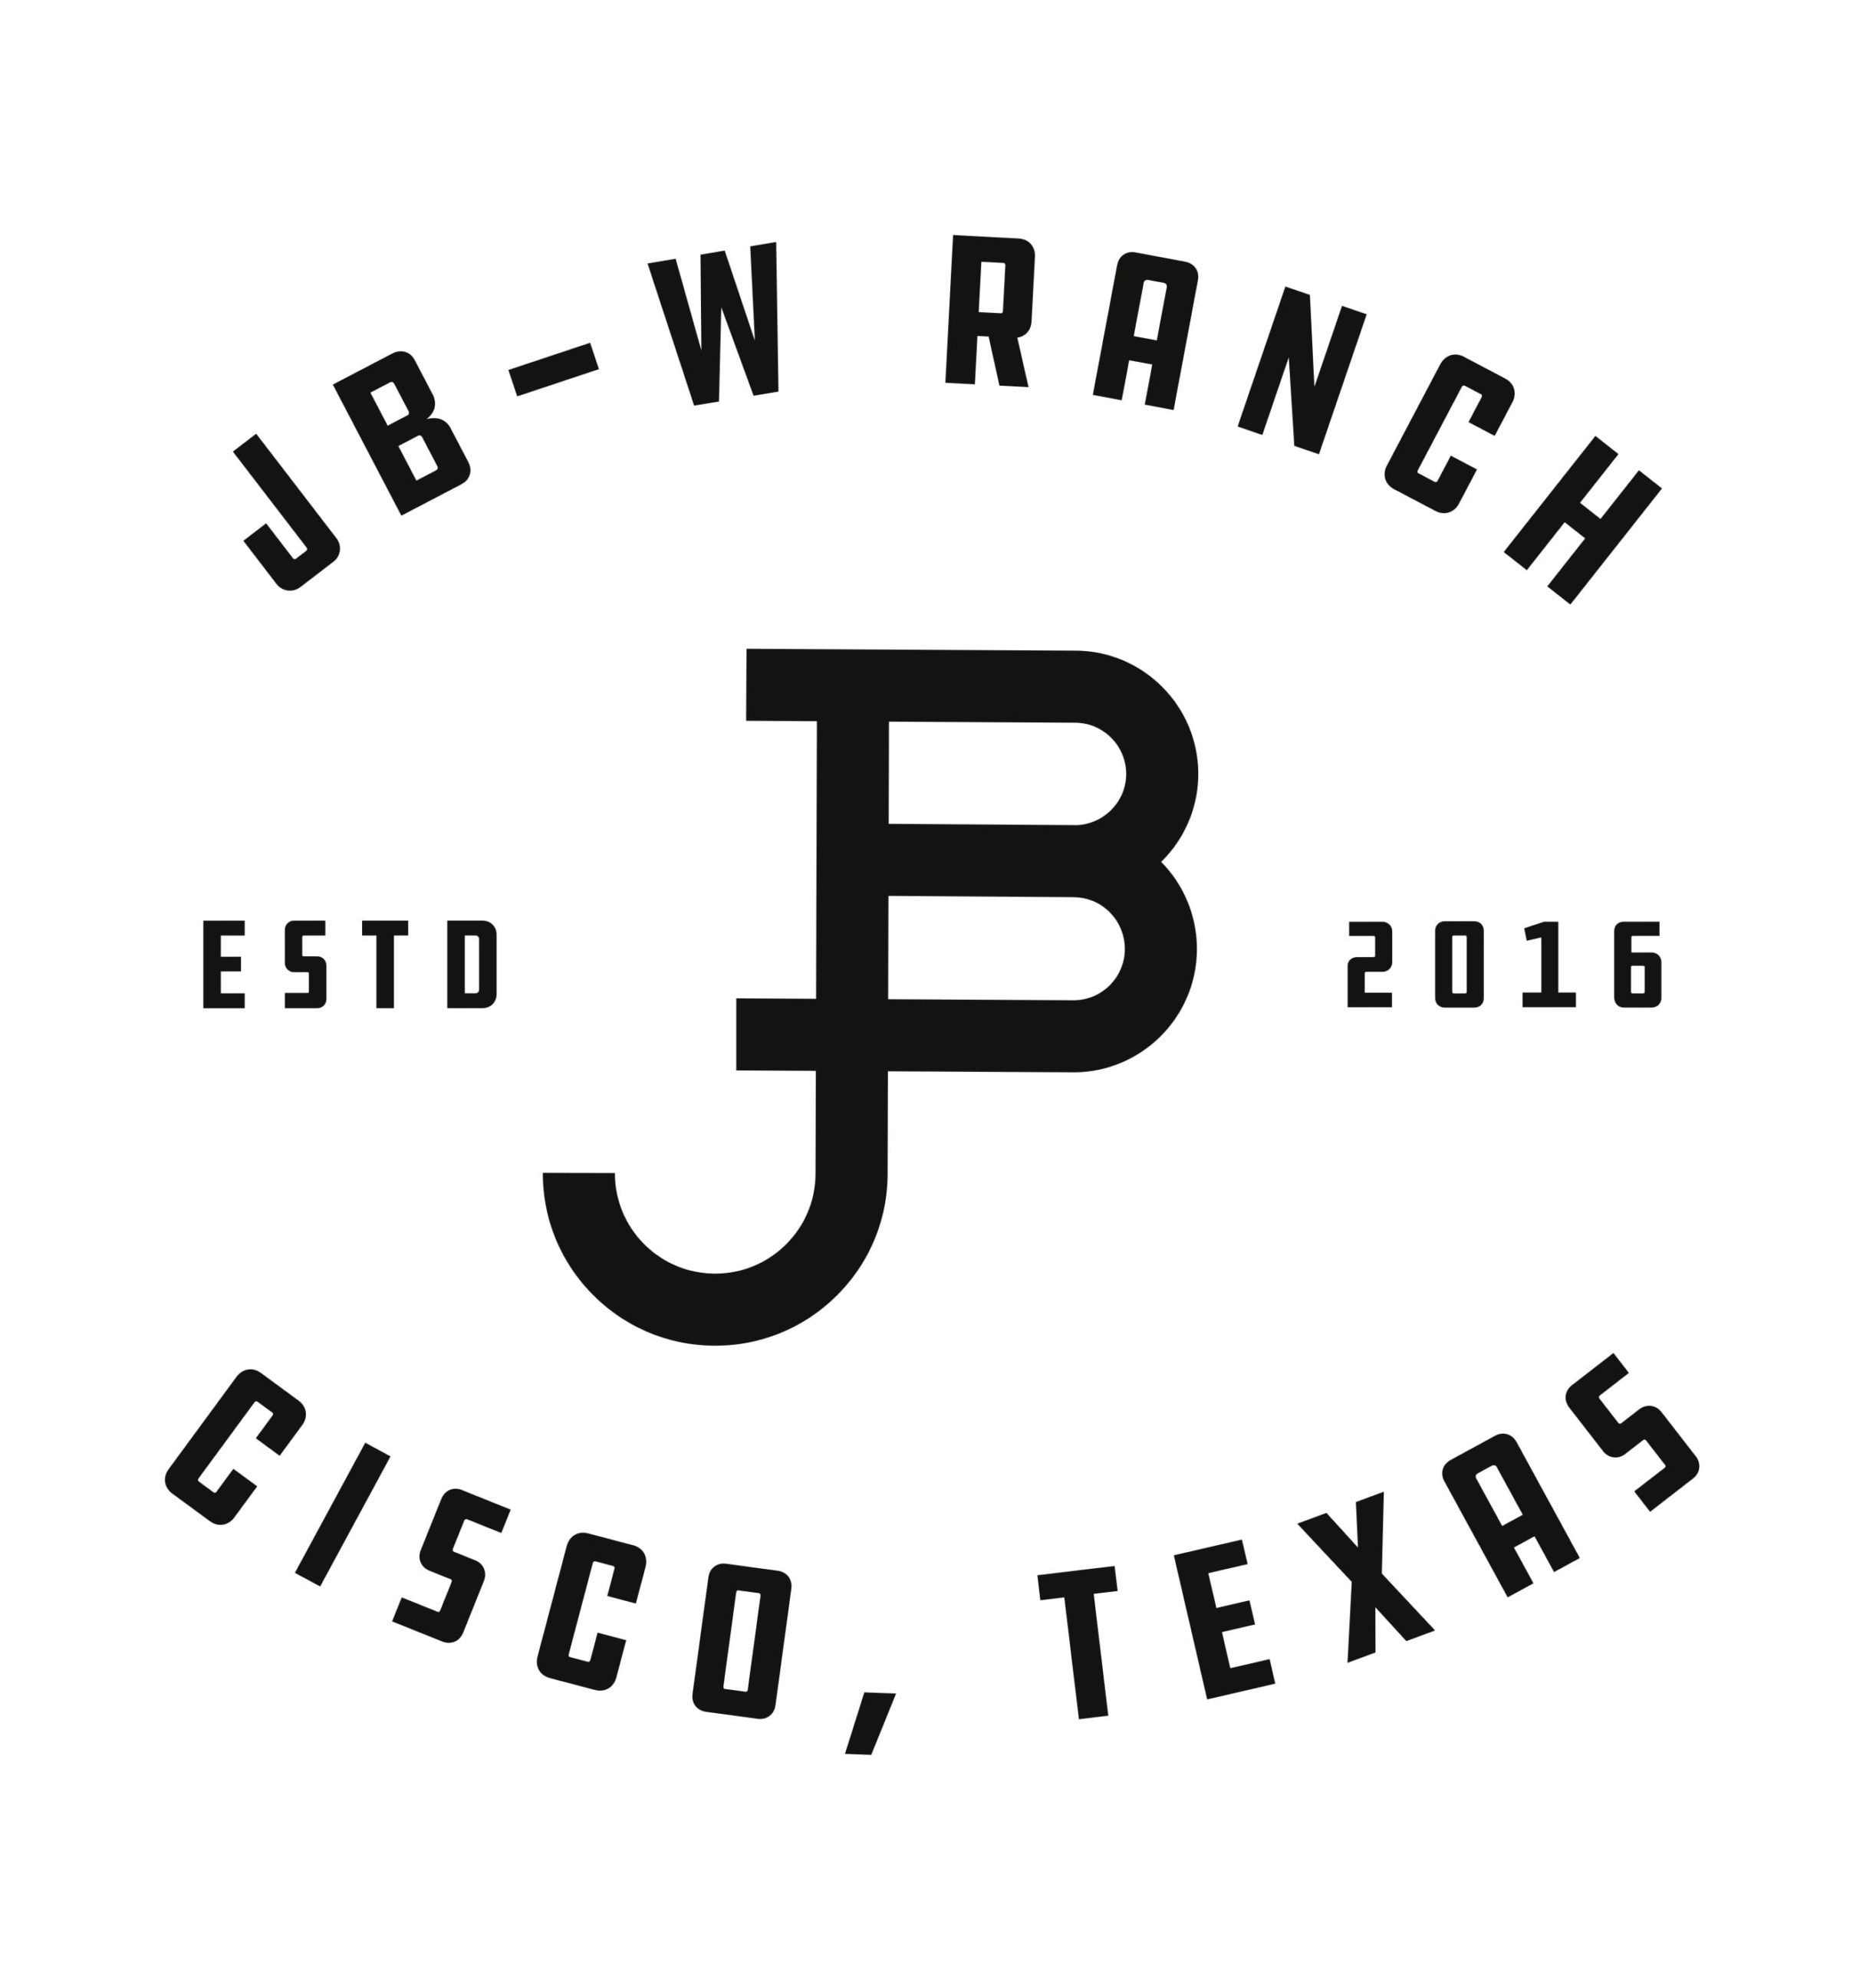 JB–W Ranch Artwork